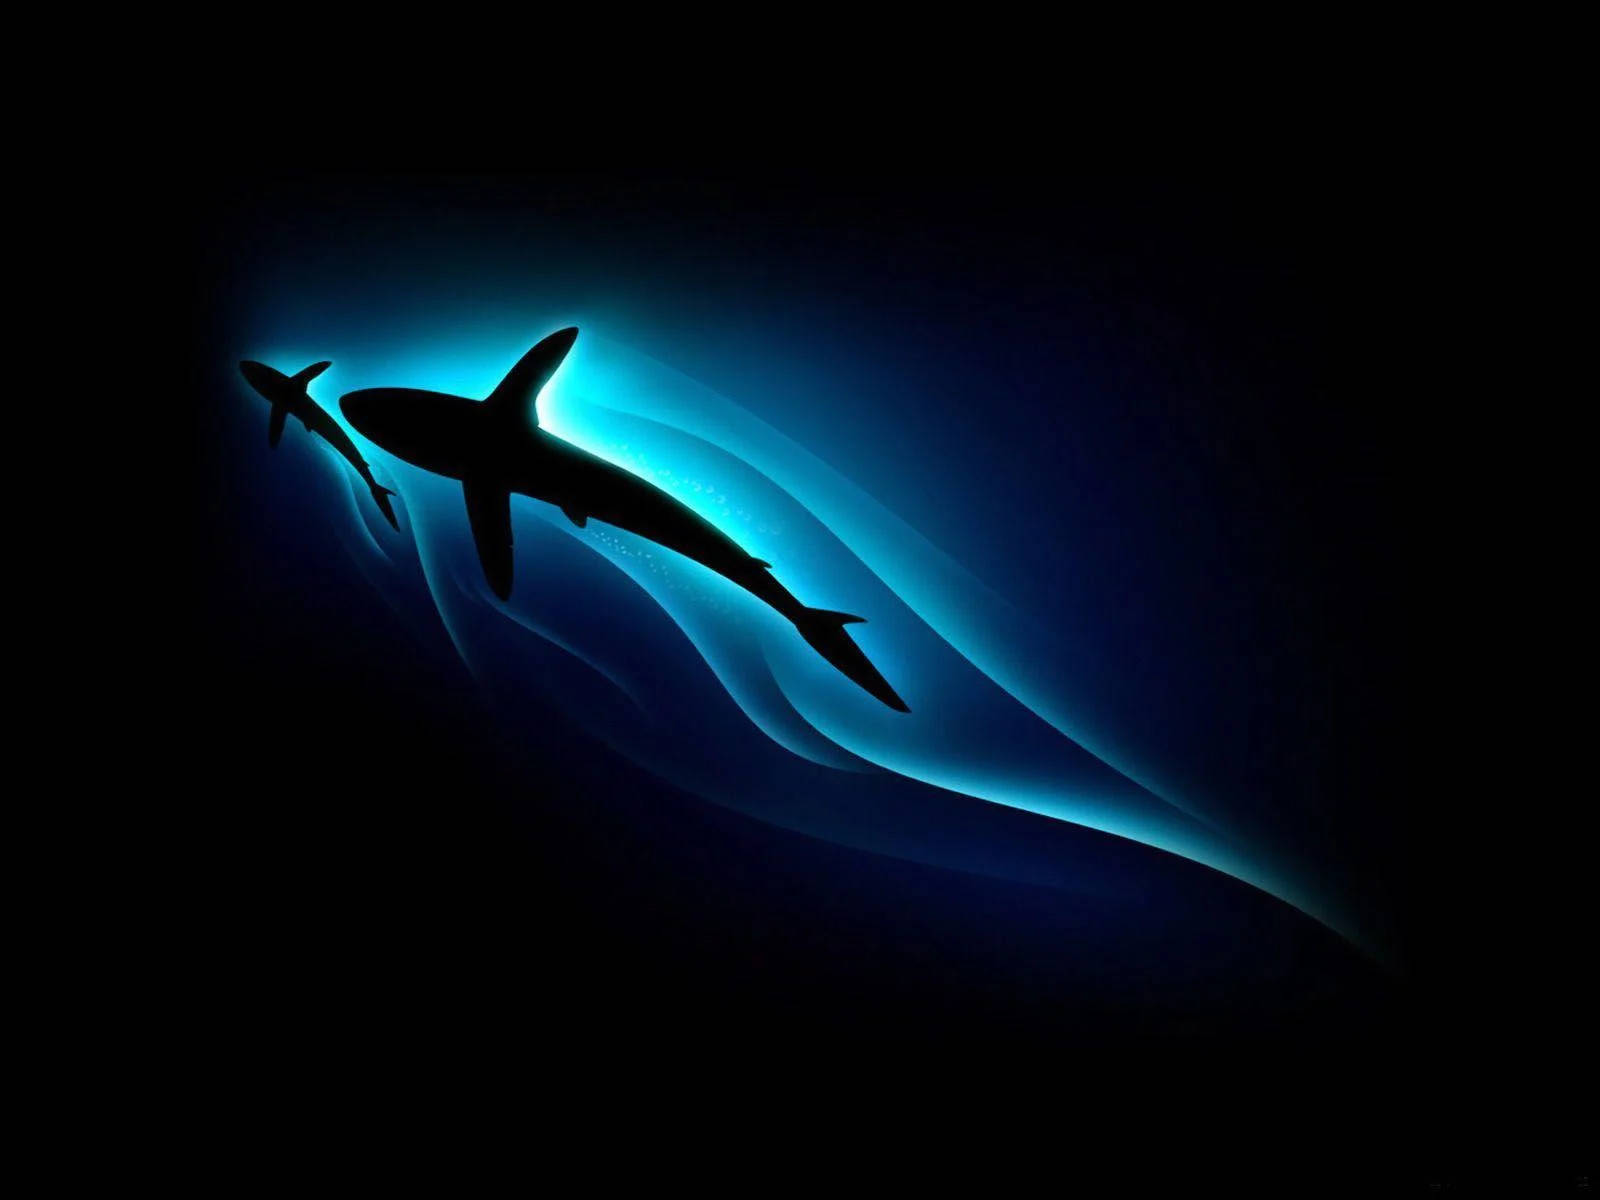 Stylish Sharks Silhouettes Wallpaper